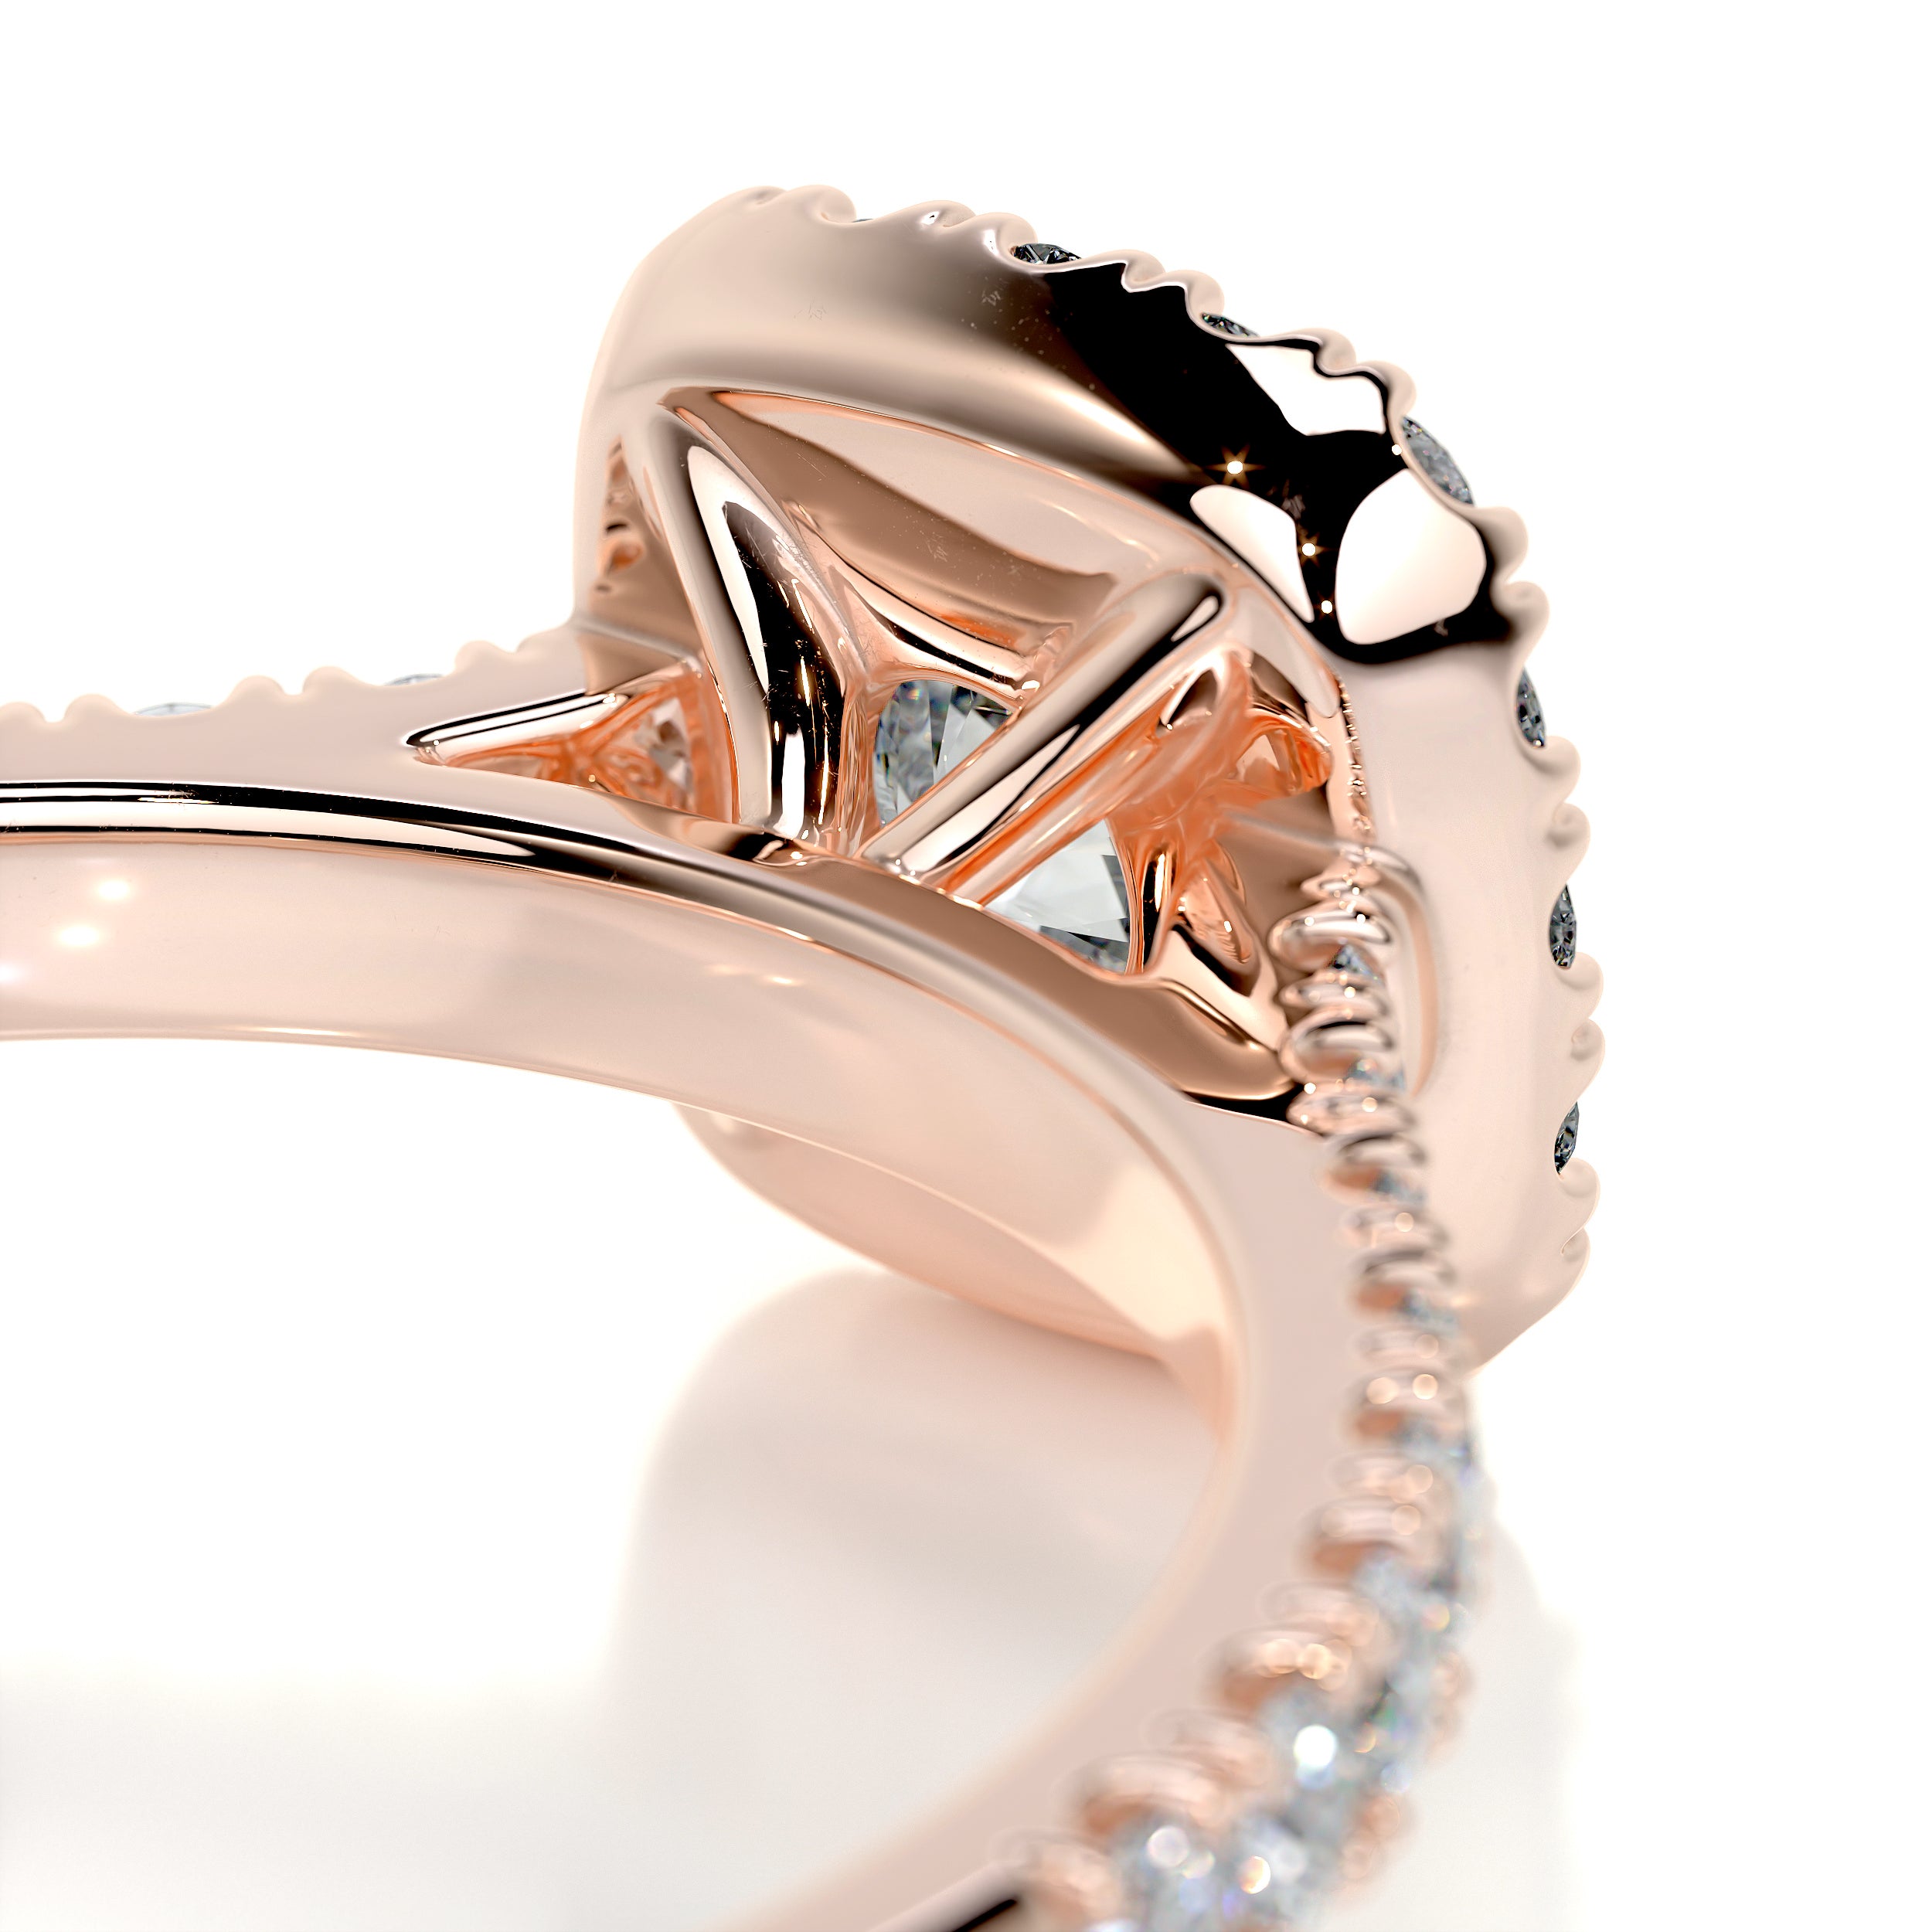 Claudia Diamond Engagement Ring   (0.70 Carat) -14K Rose Gold